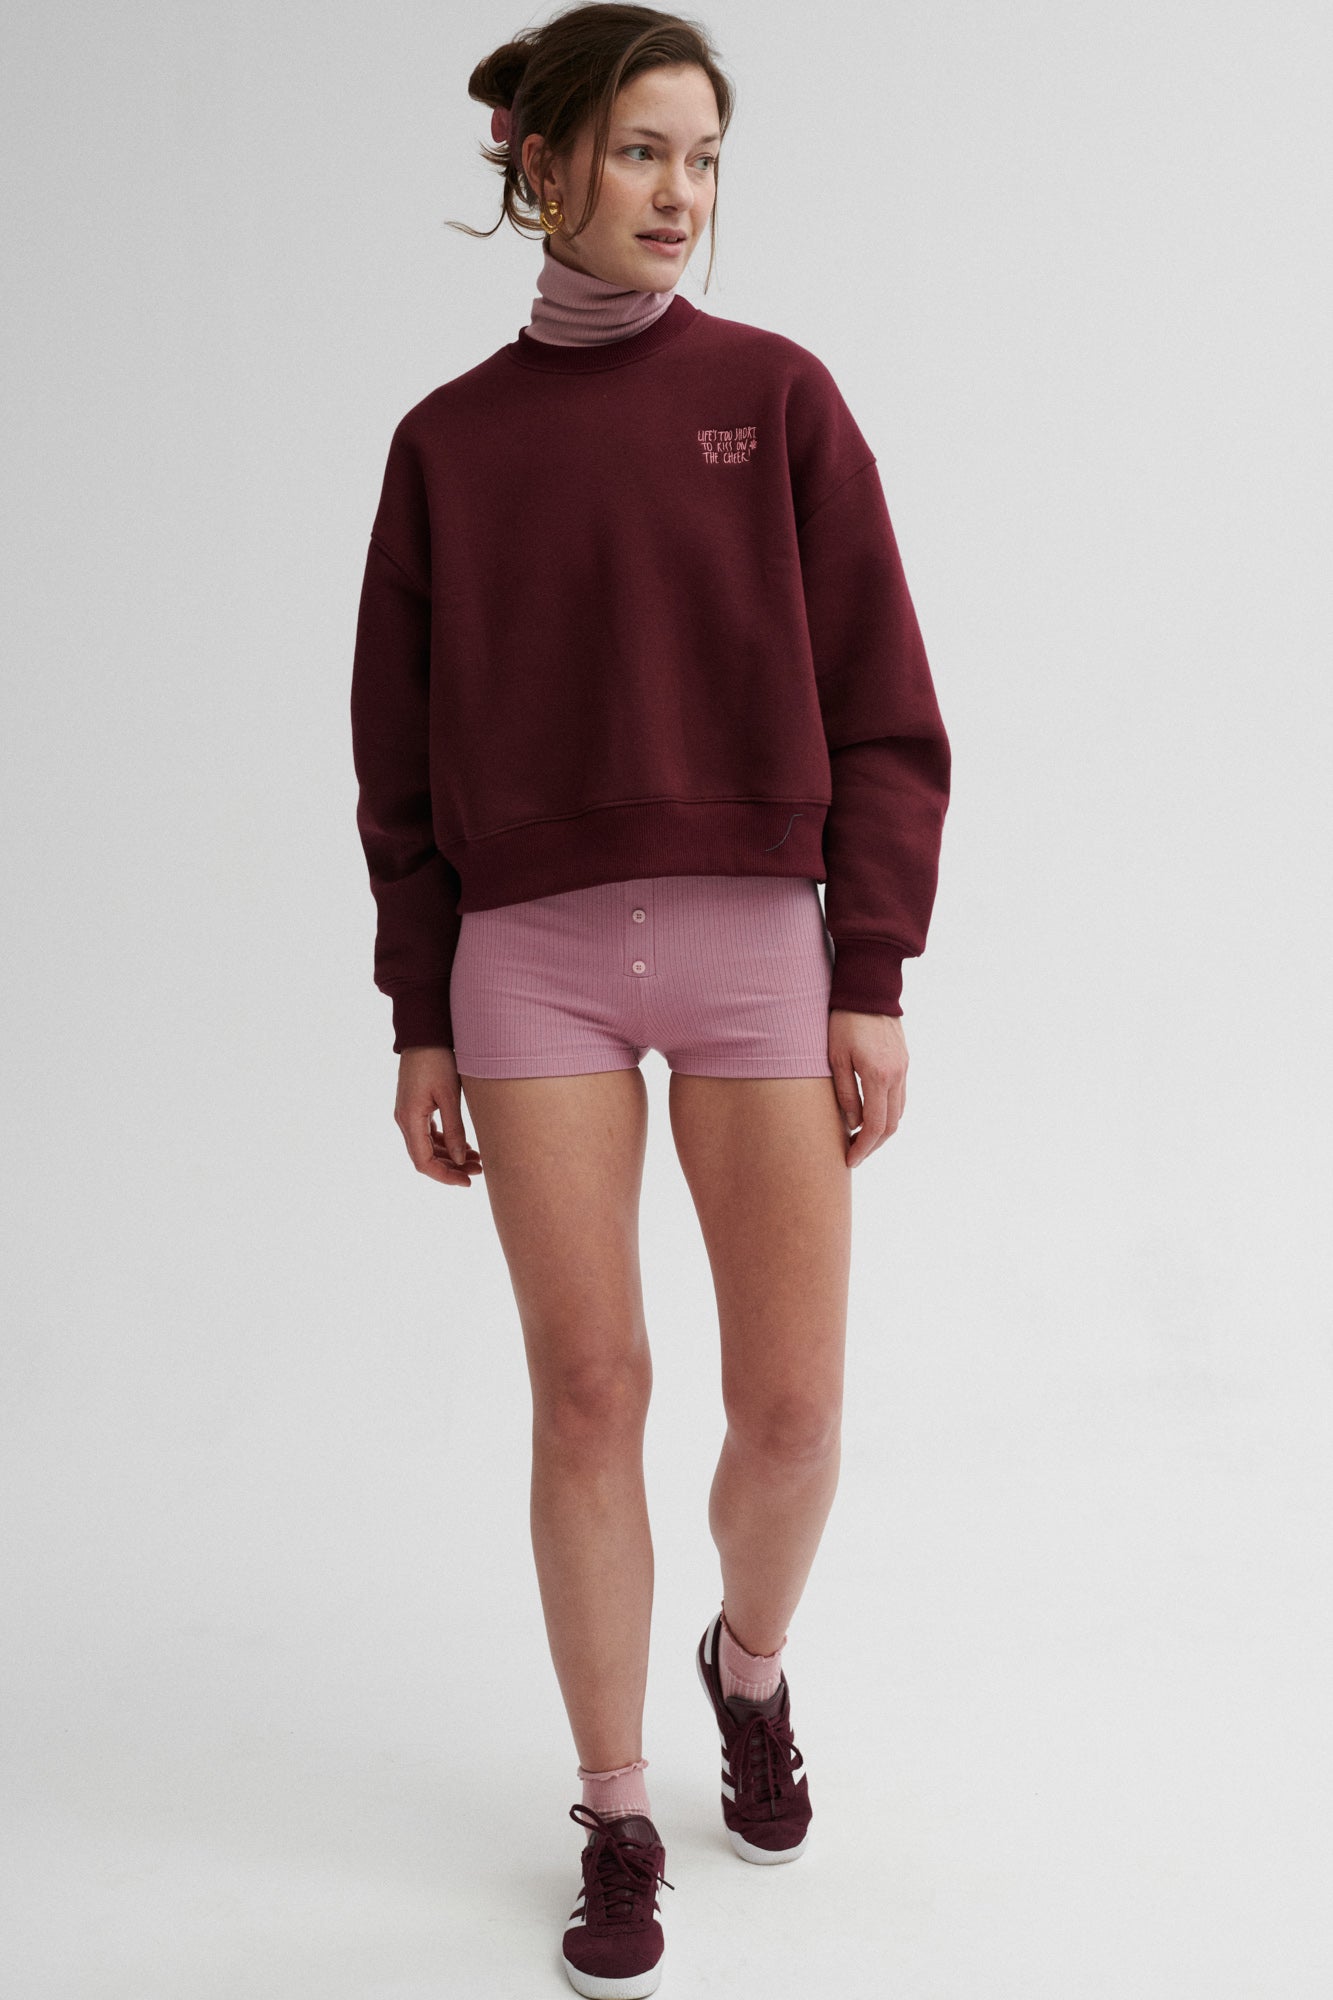 Sweatshirt in cotton / 17 / 17 / merlot red / embroidery